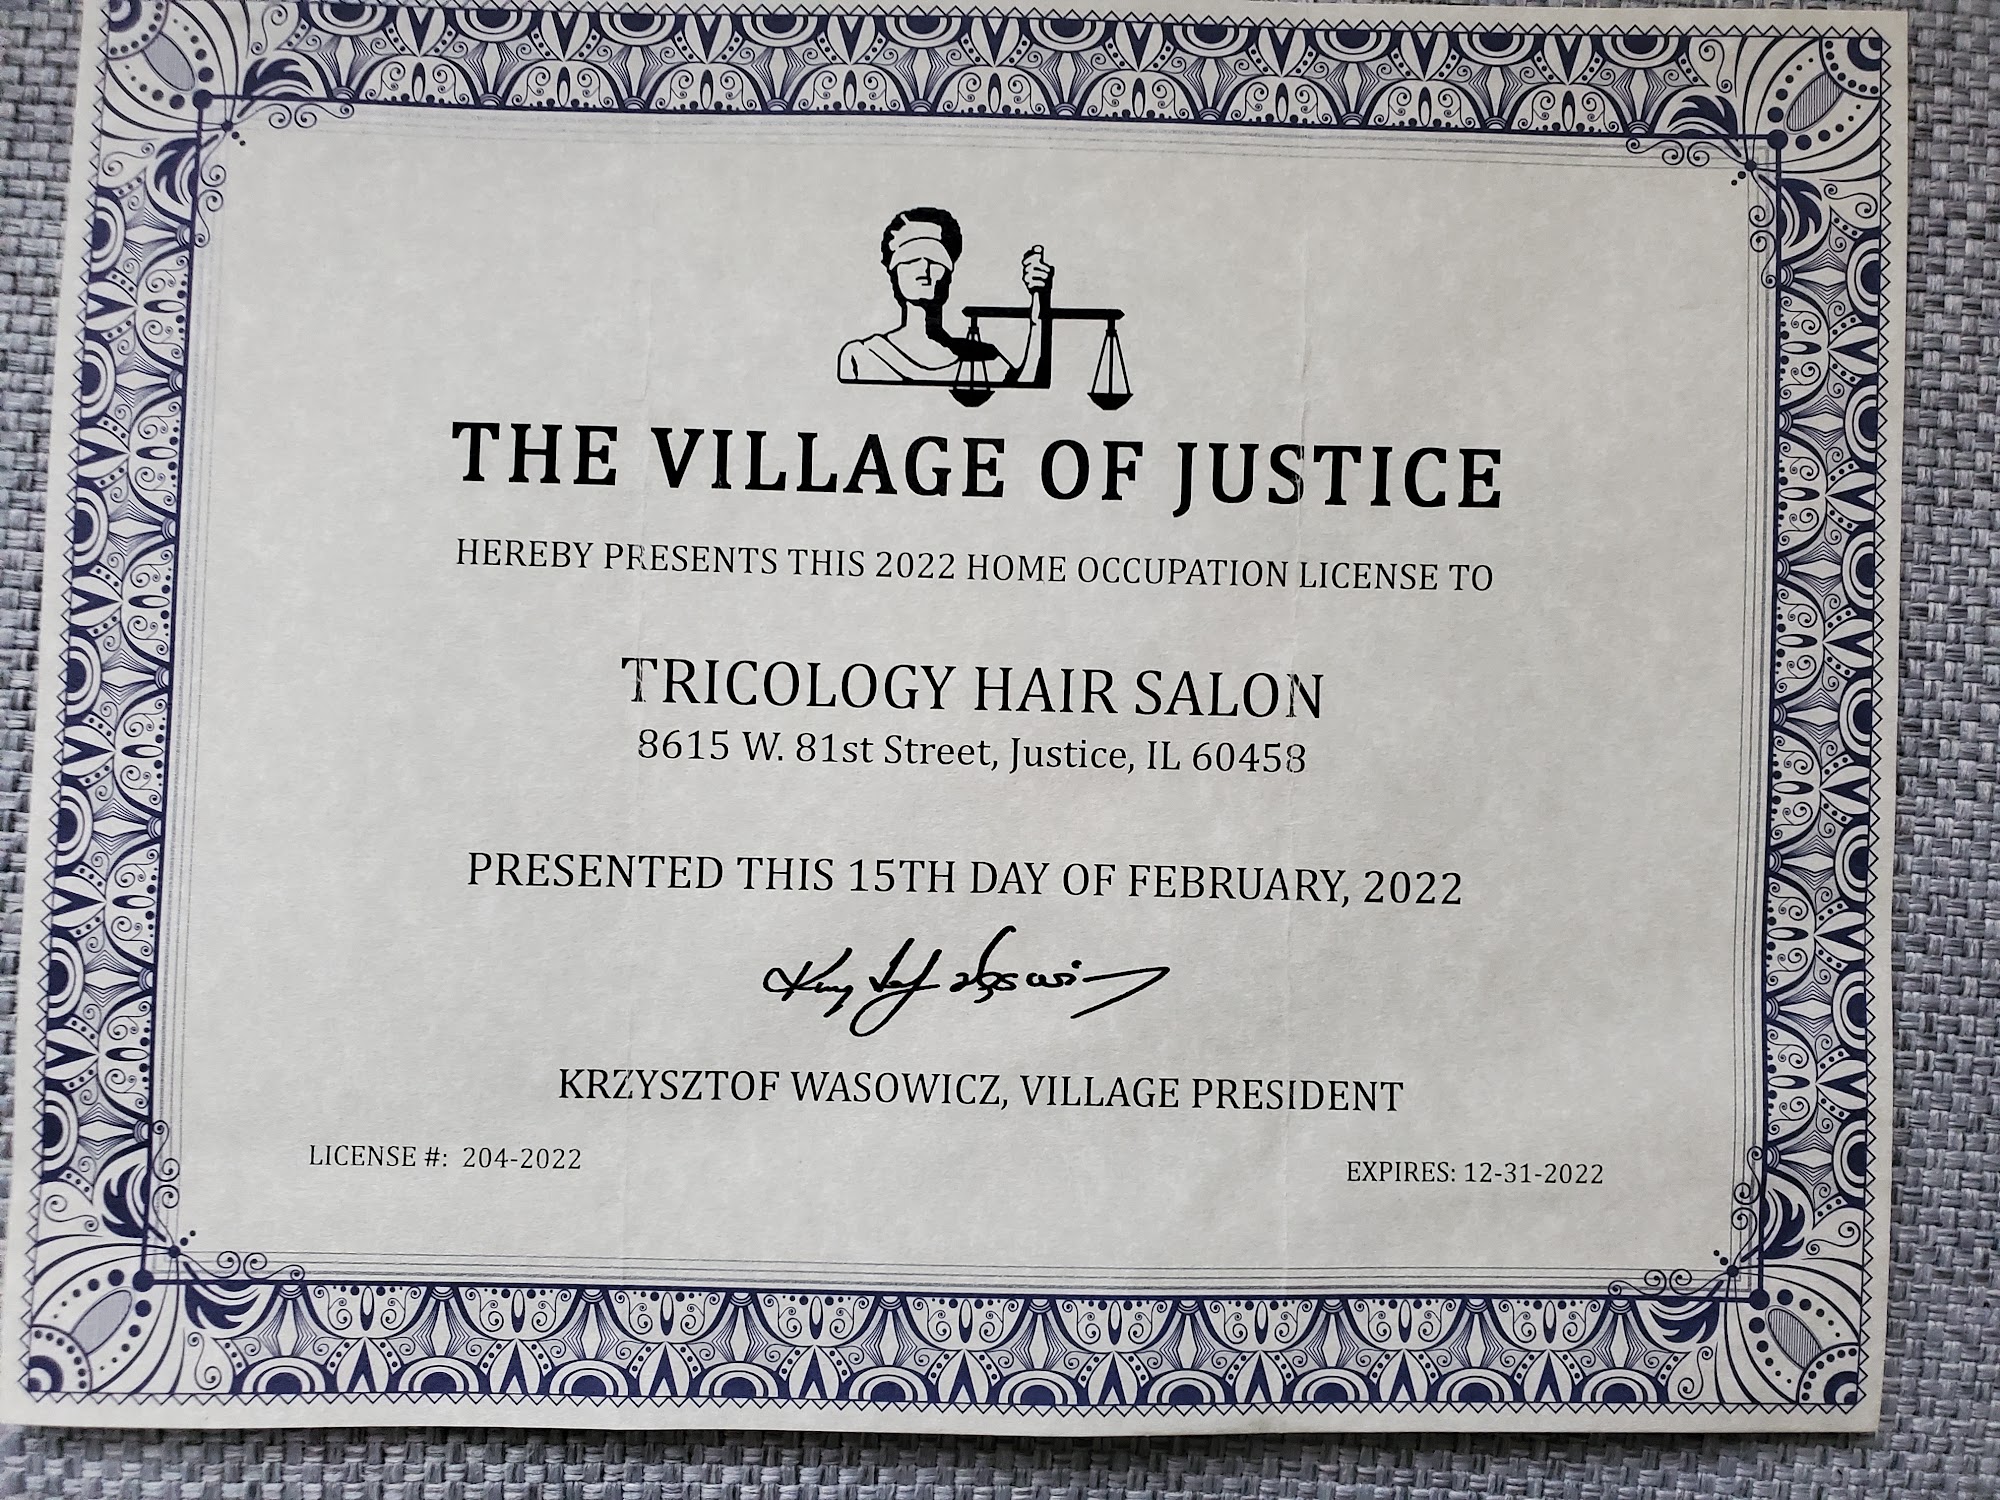 Tricology Hair Salon 8615 W 81st St, Justice Illinois 60458